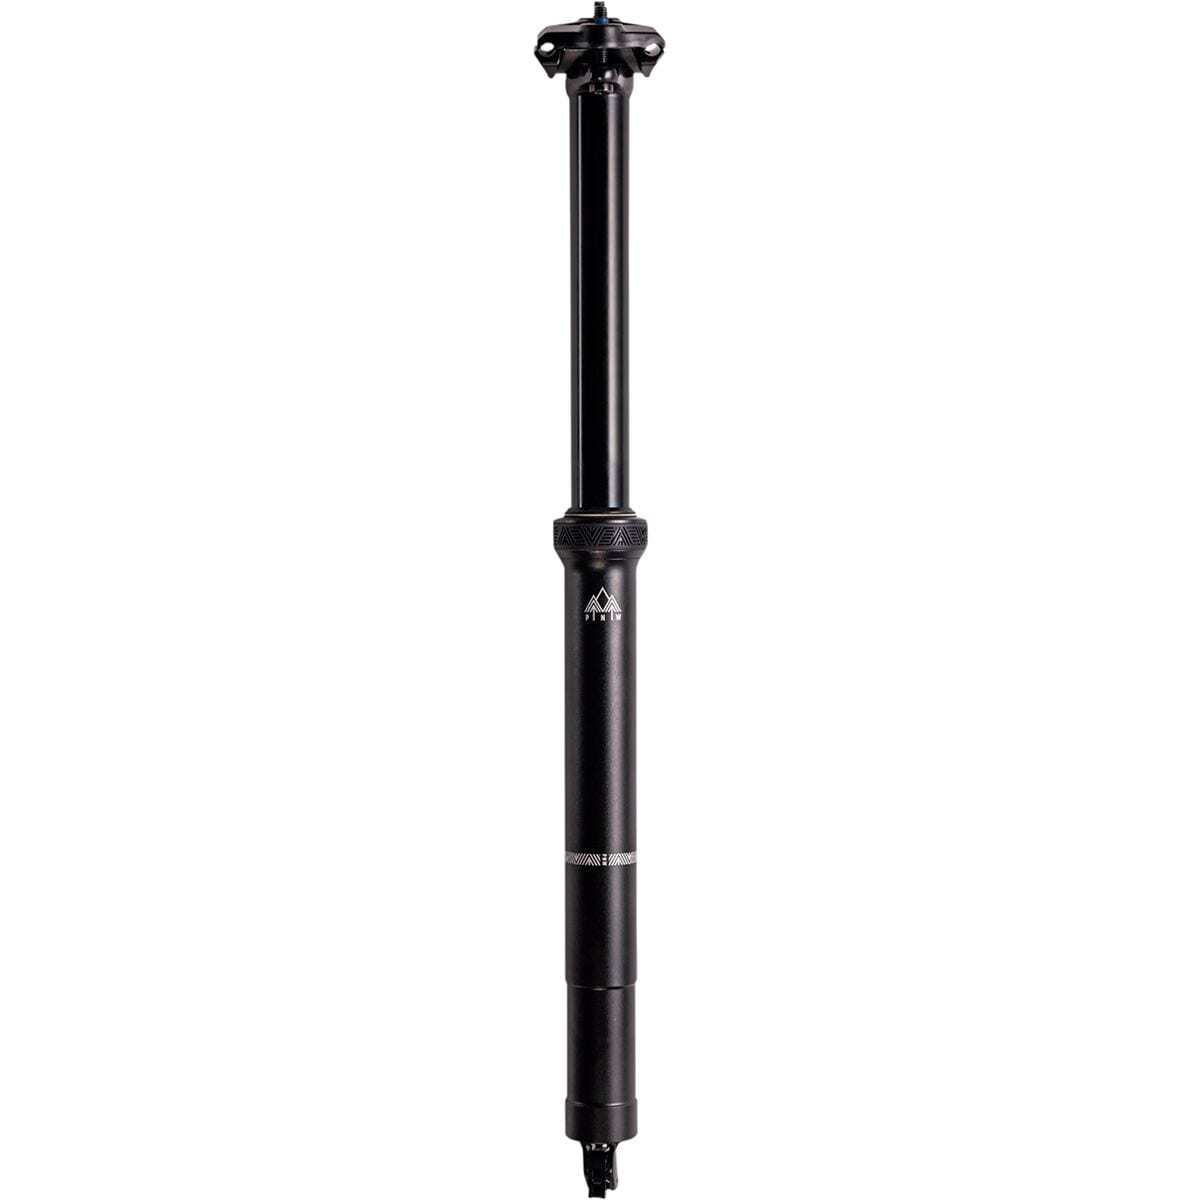 PNW Components Loam Dropper Seatpost Black, 31.6 x 125mm Travel